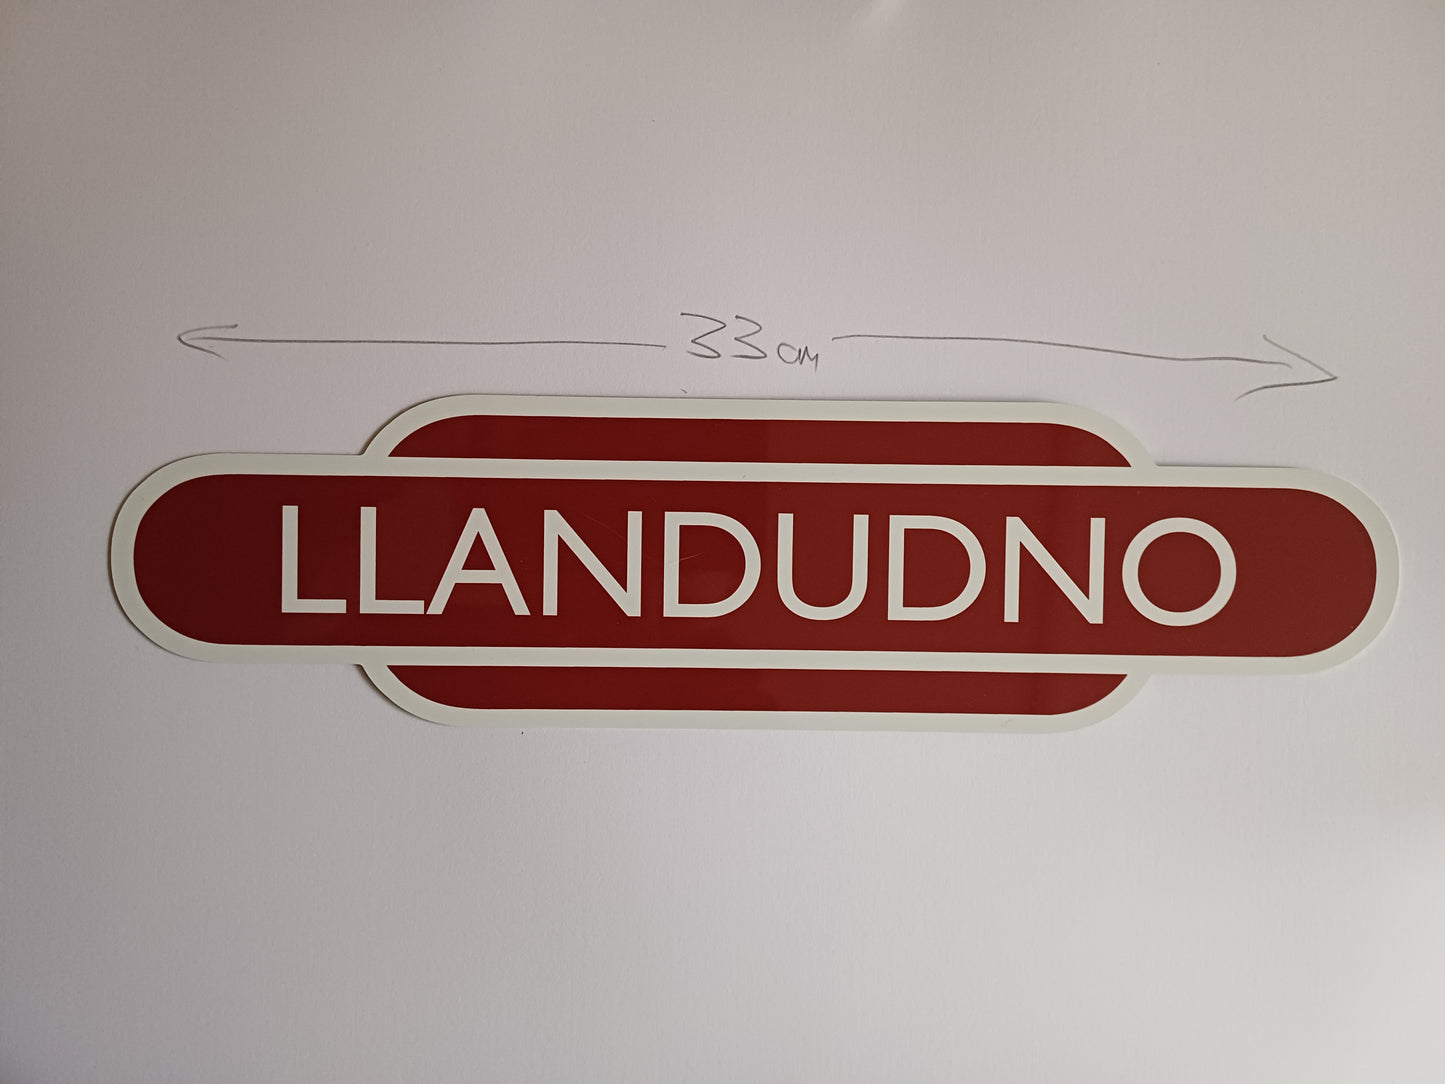 Llandudno large metal train sign - 33cm